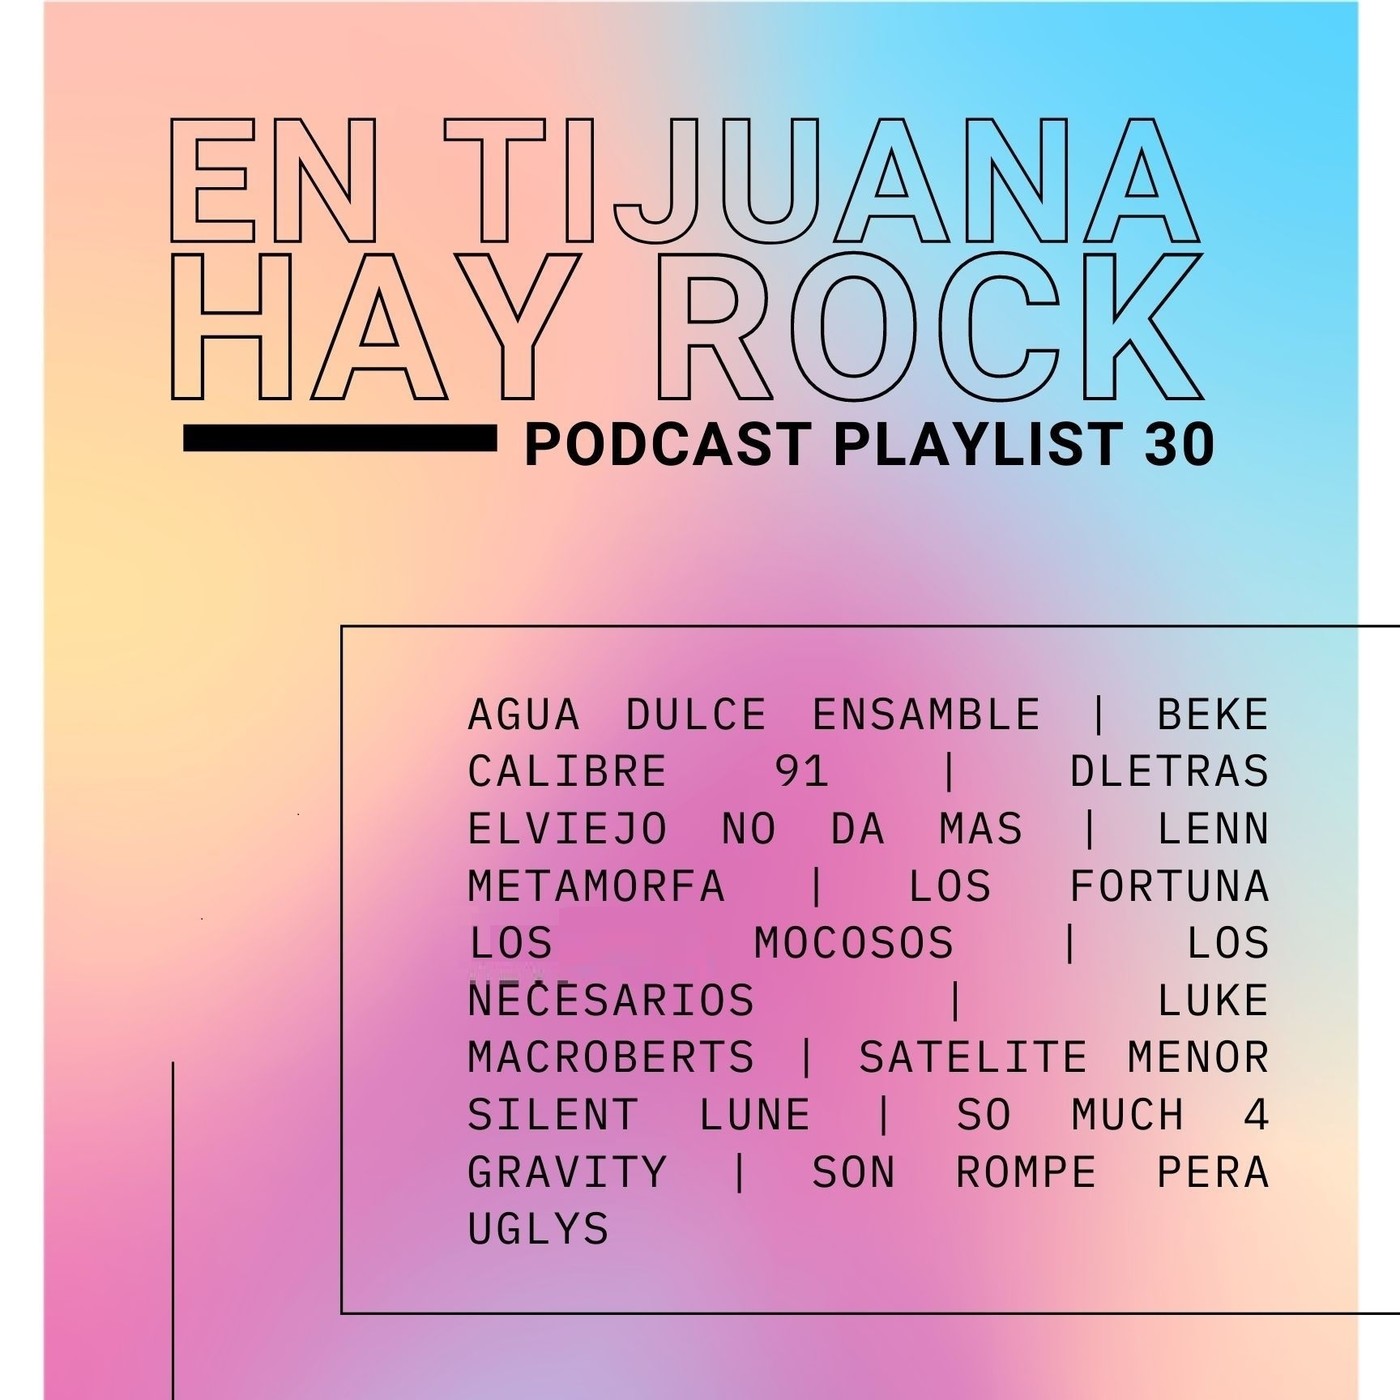 En Tijuana Hay Rock Podcast: Playlist - Programa #30 Image